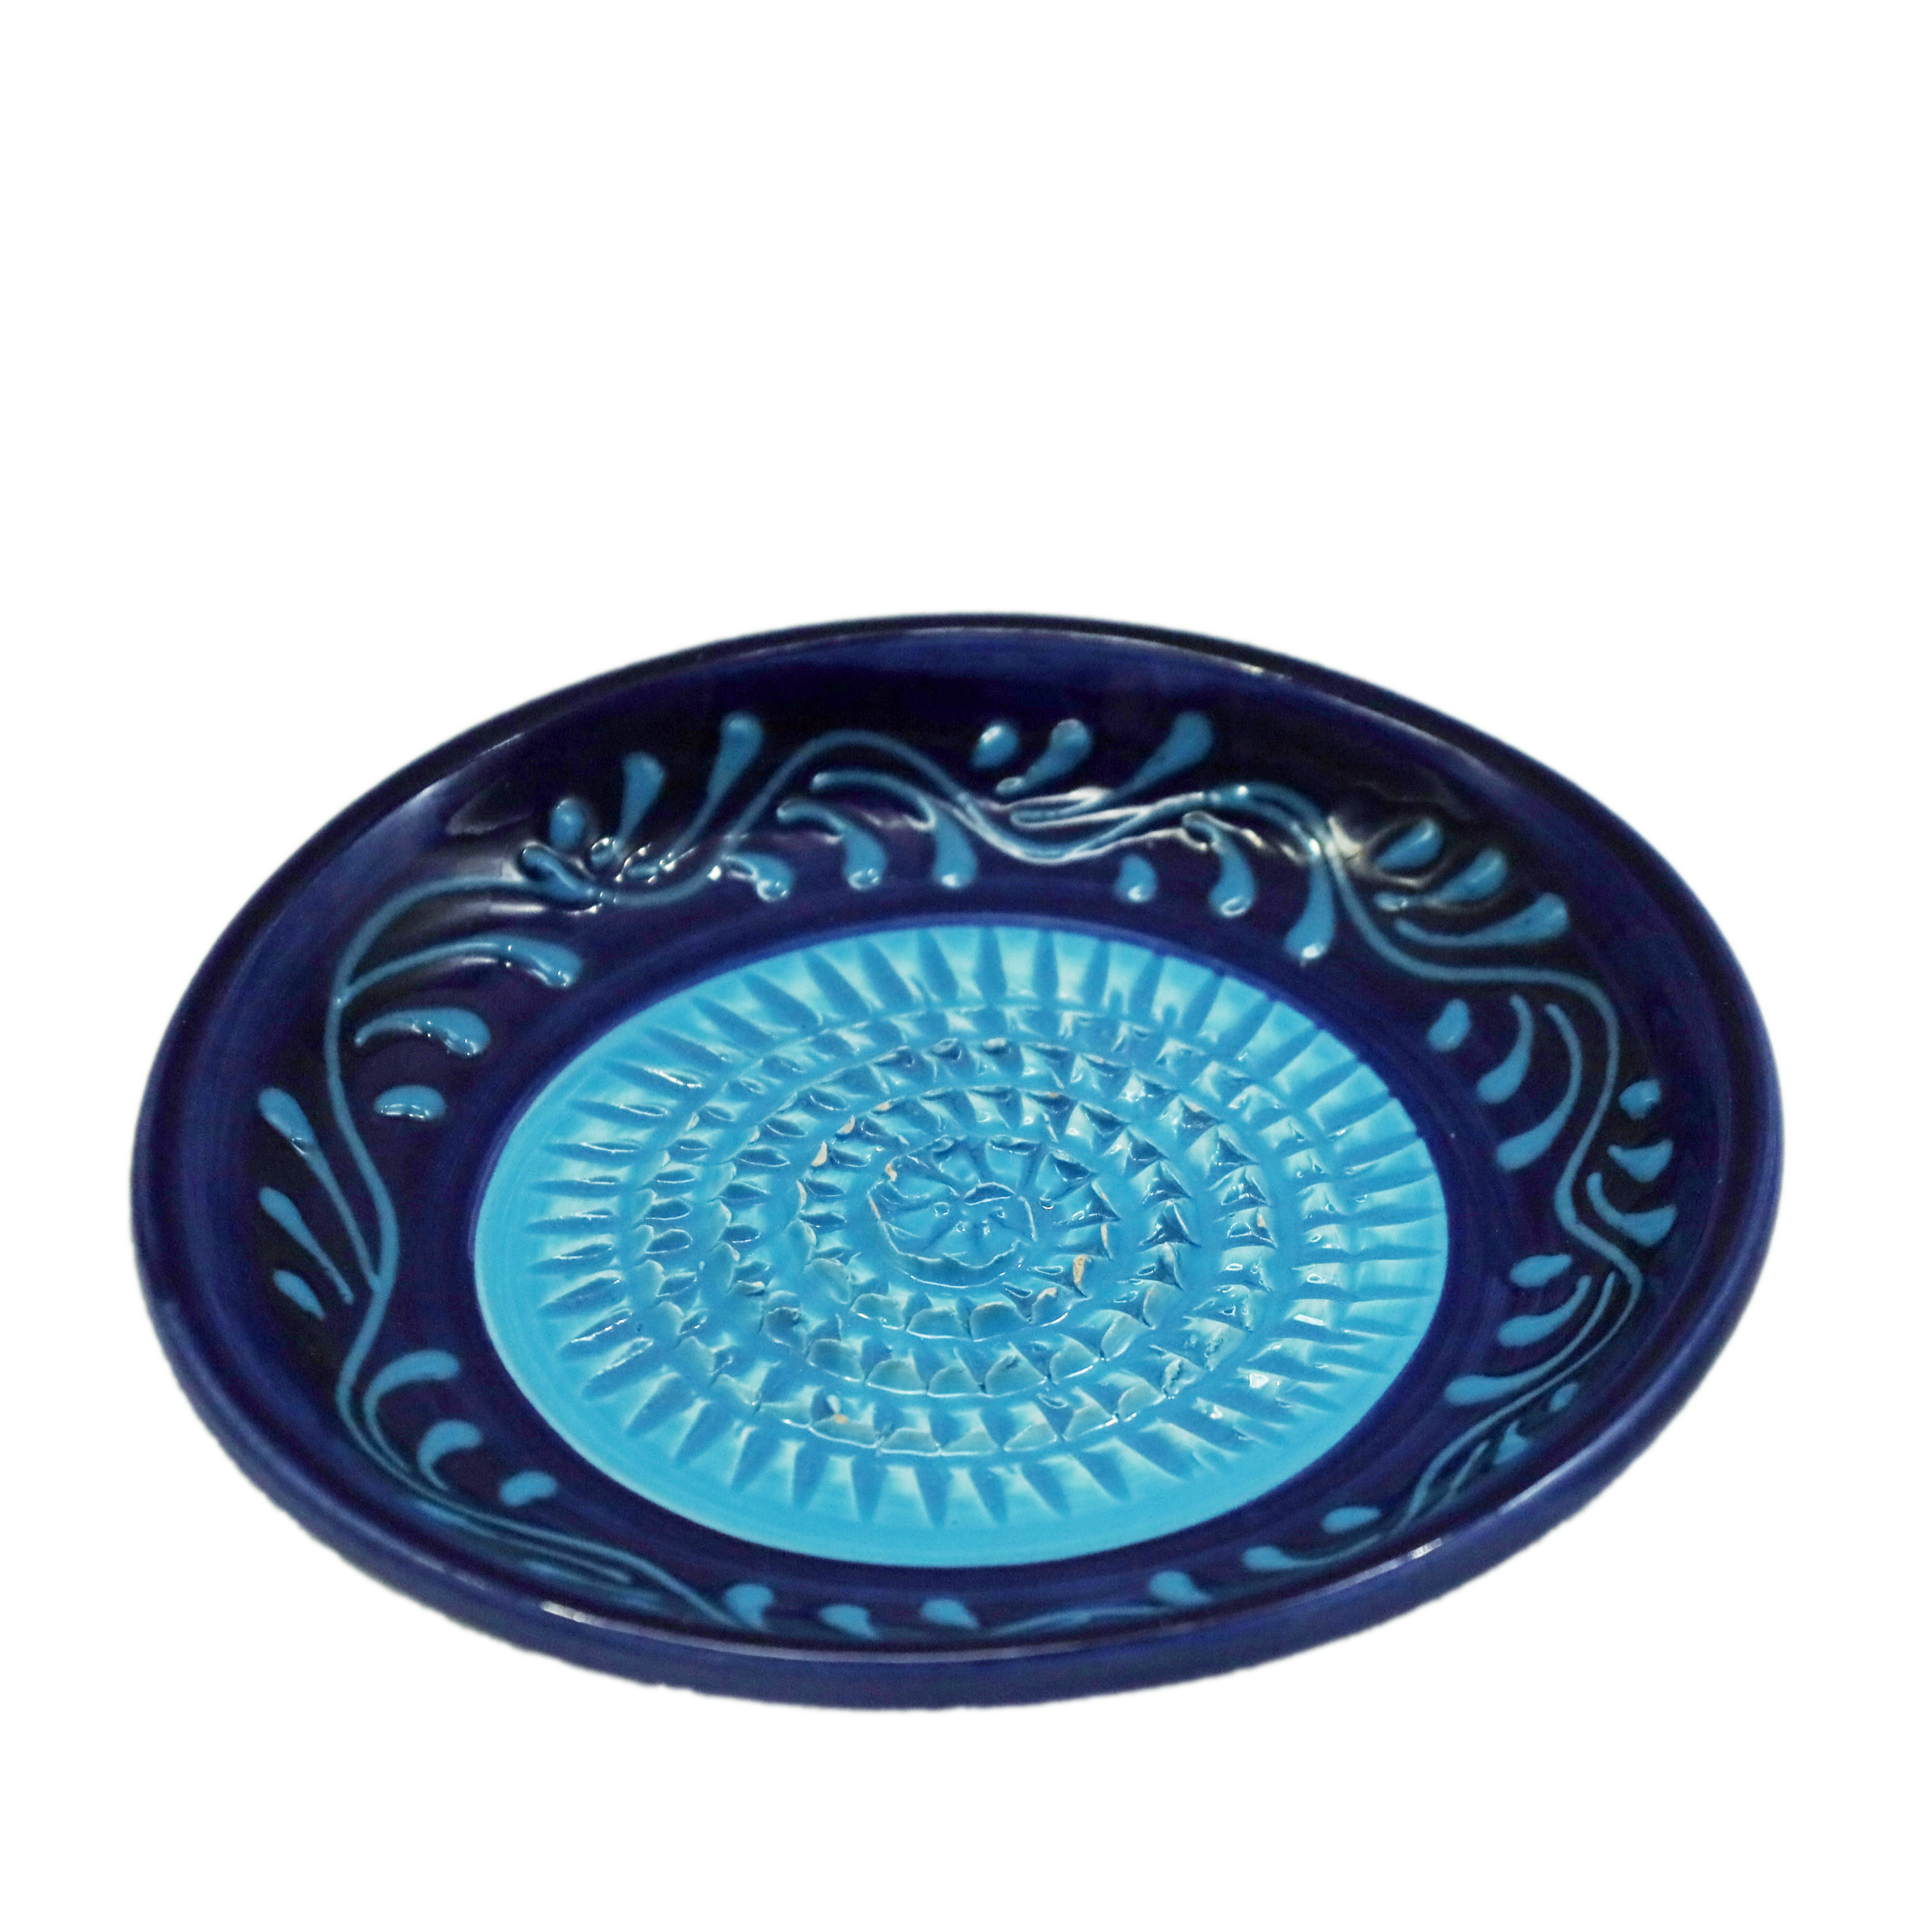 Keramikreibe in Blau-Türkis für Ingwer-Knoblauch-Käse-Nüsse-Muskat-Parmesan-Schokolade uvm.